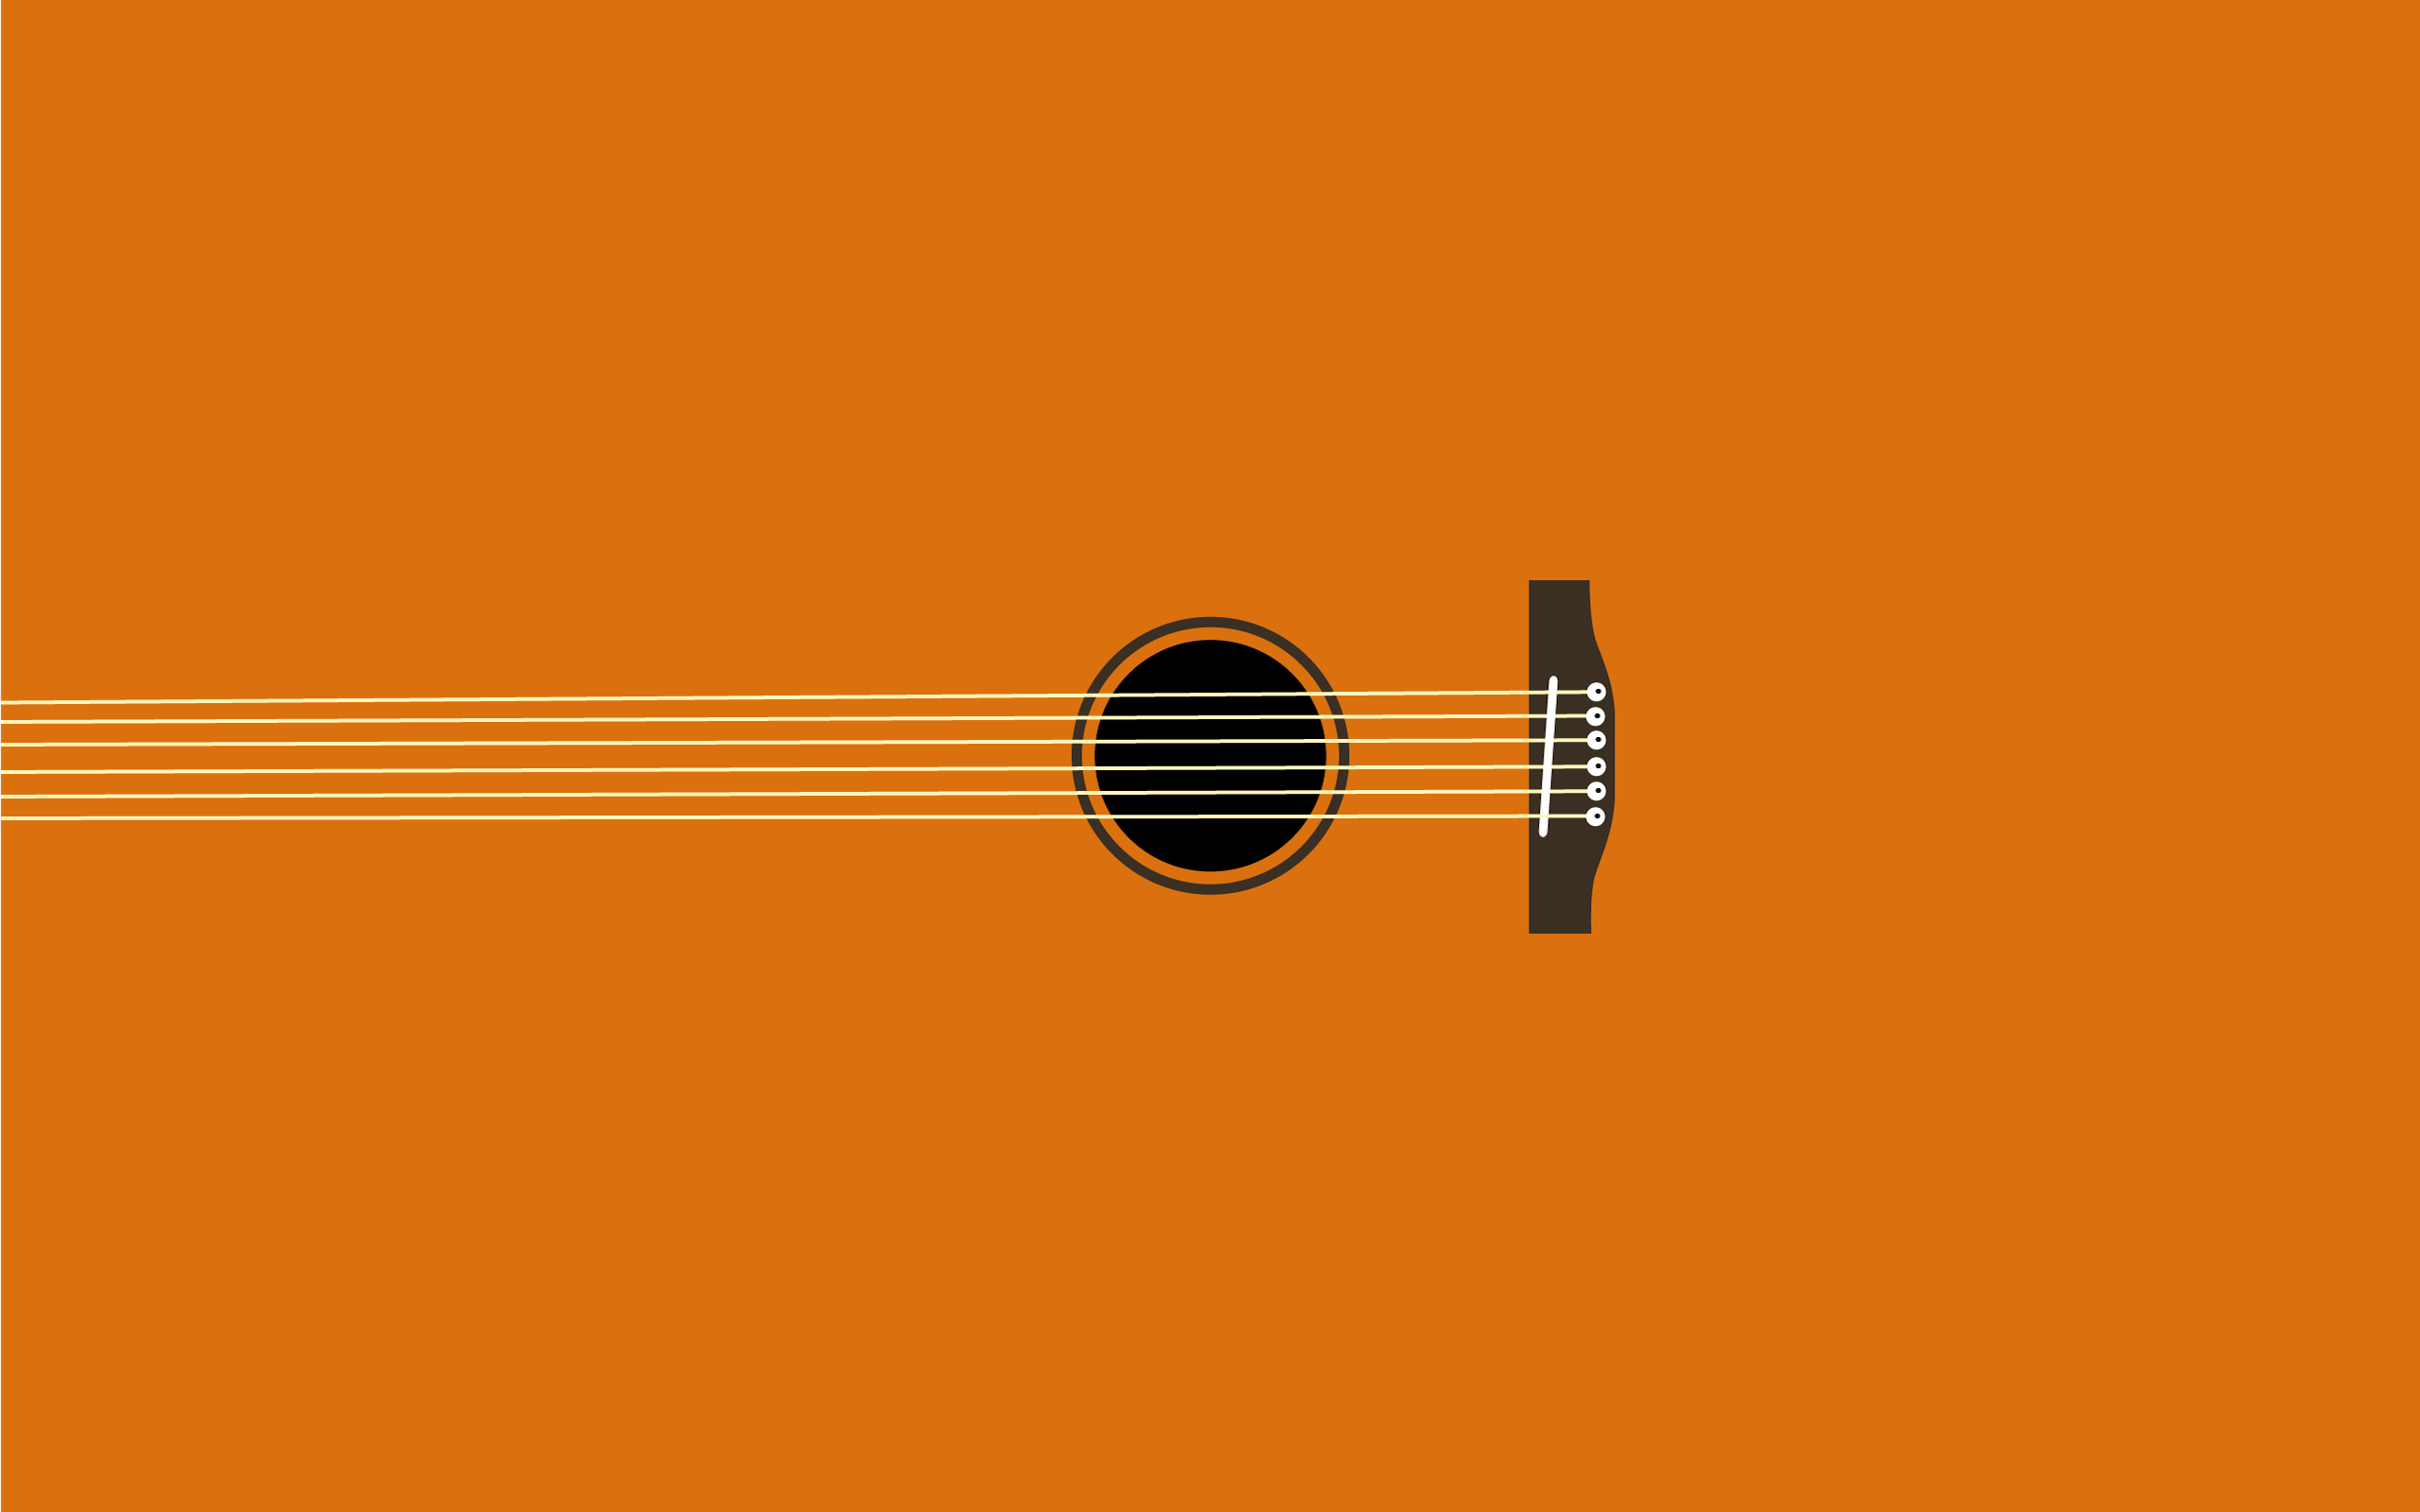 acoustic_guitar png 2,560×1,600 pixels | Wallpapers | Pinterest